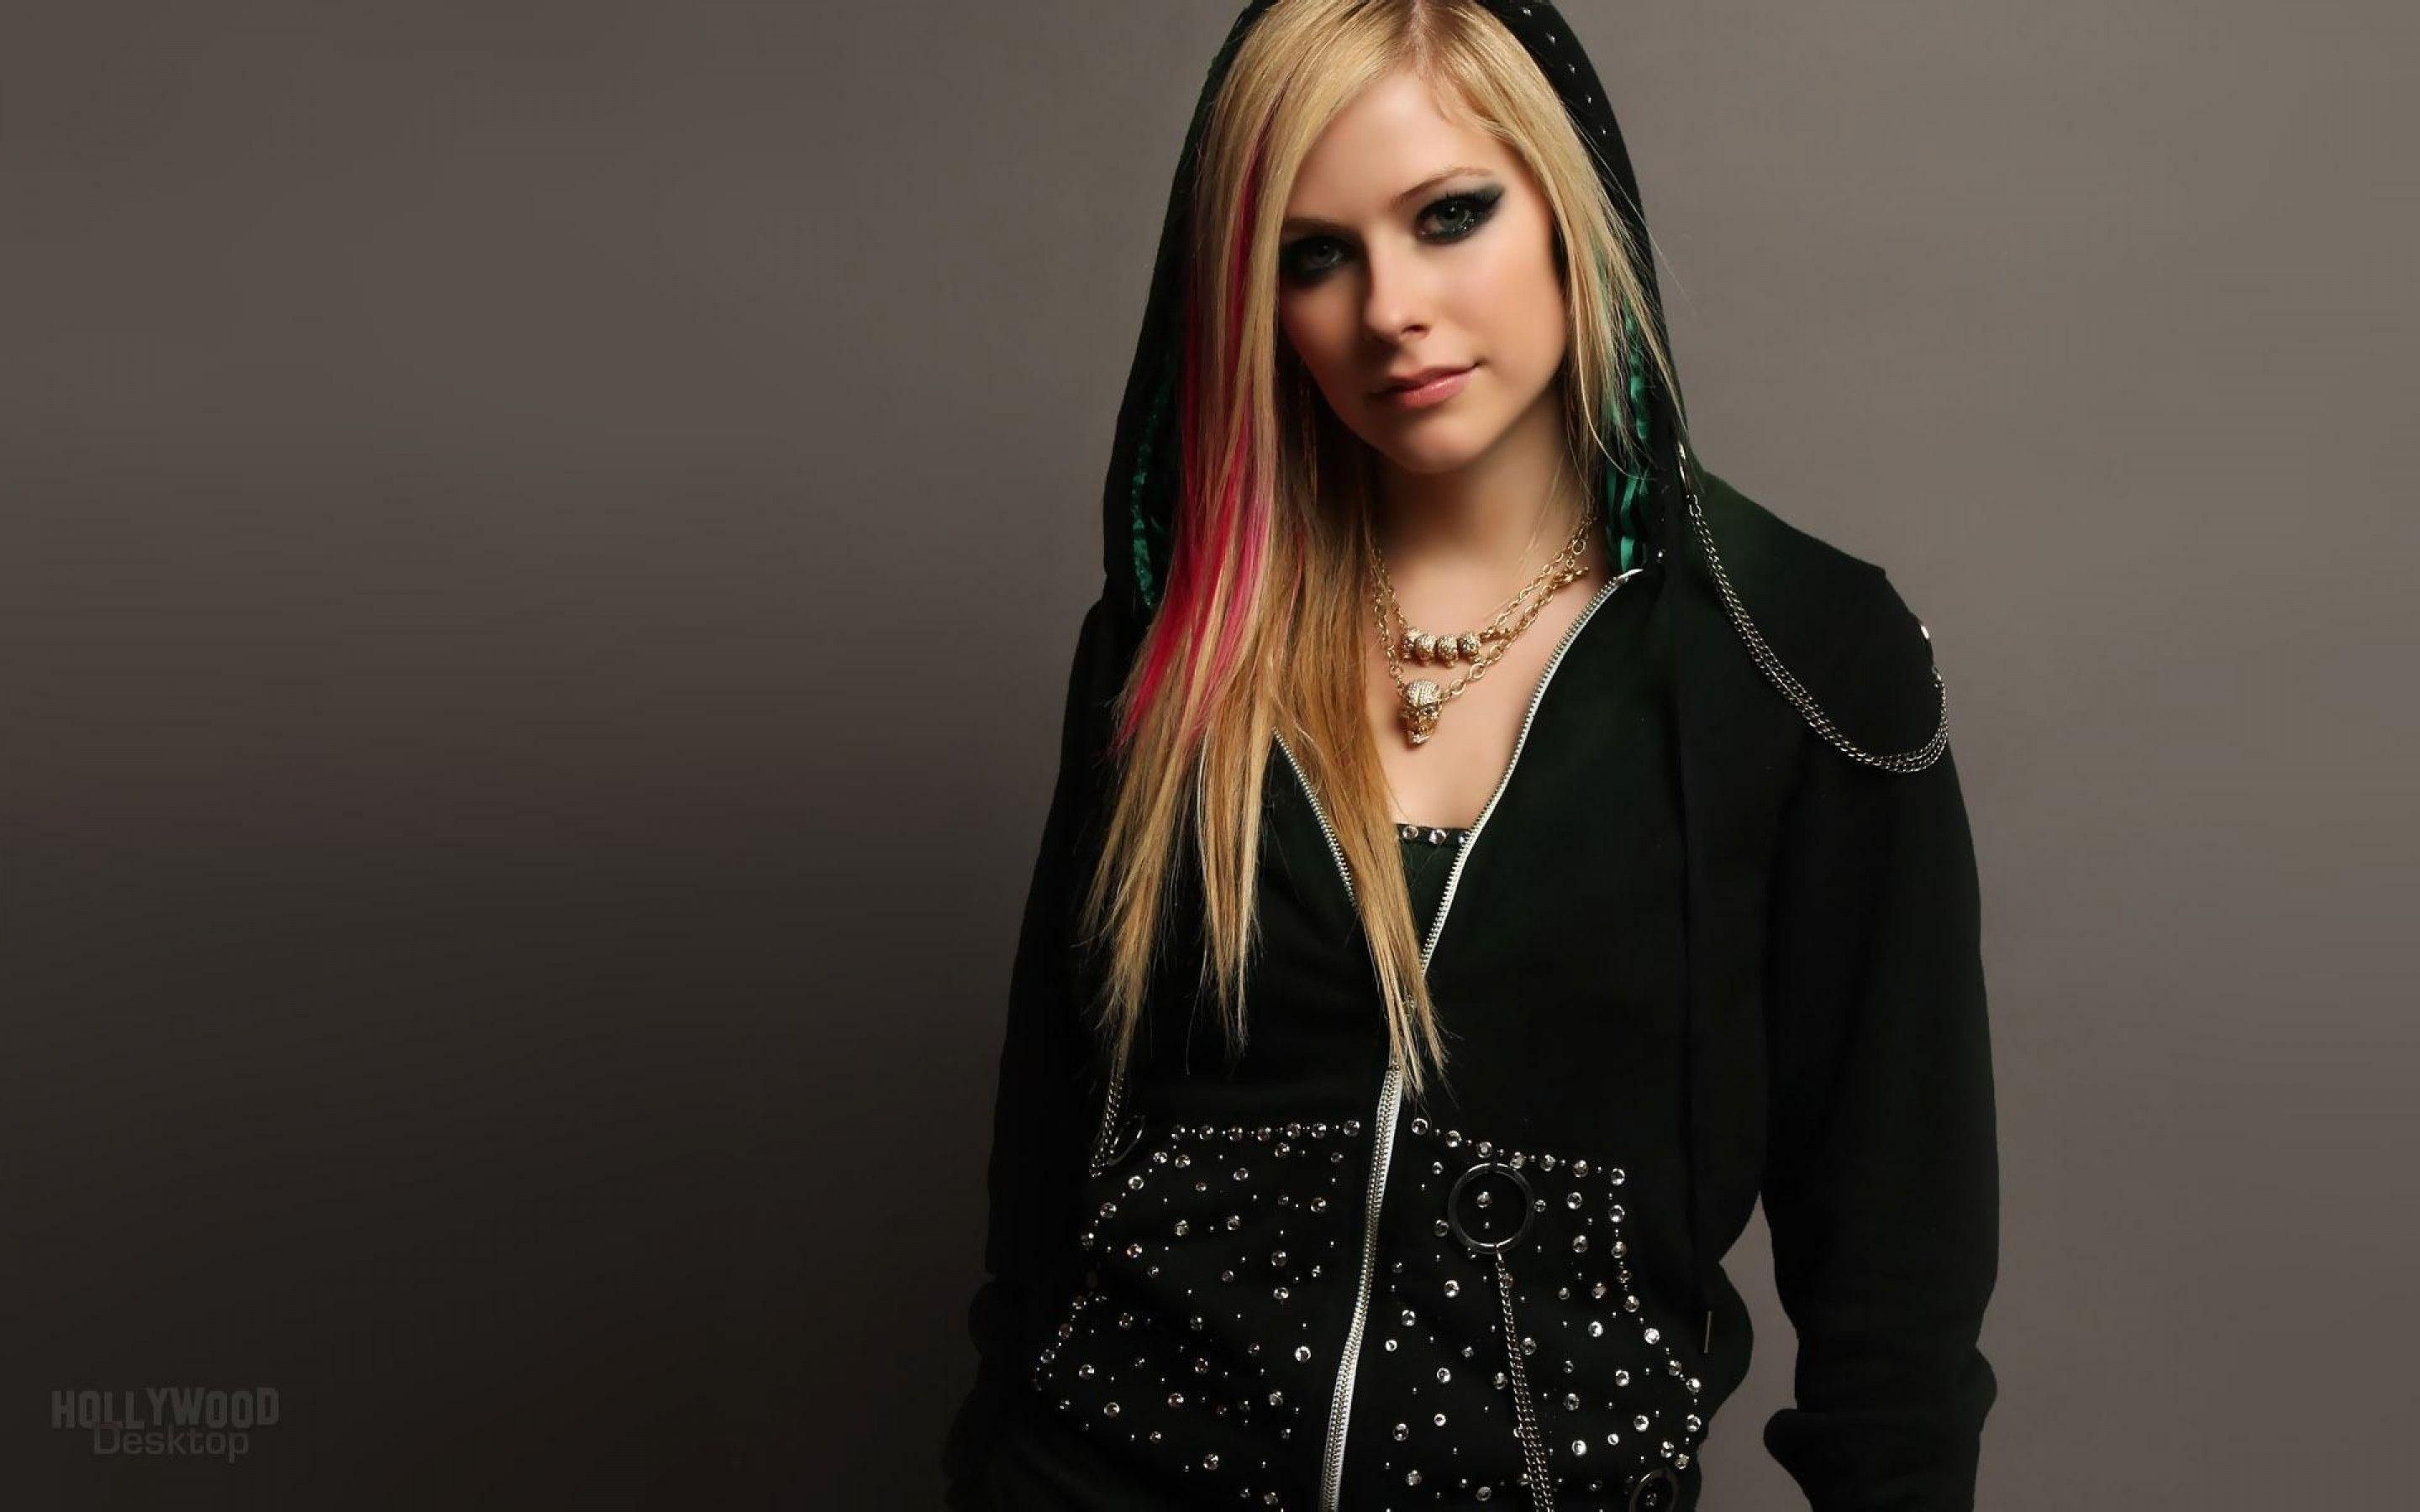 Avril Lavigne Wallpaper 56 Background. Wallruru. Avril lavigne, Latest wallpaper, Art wallpaper